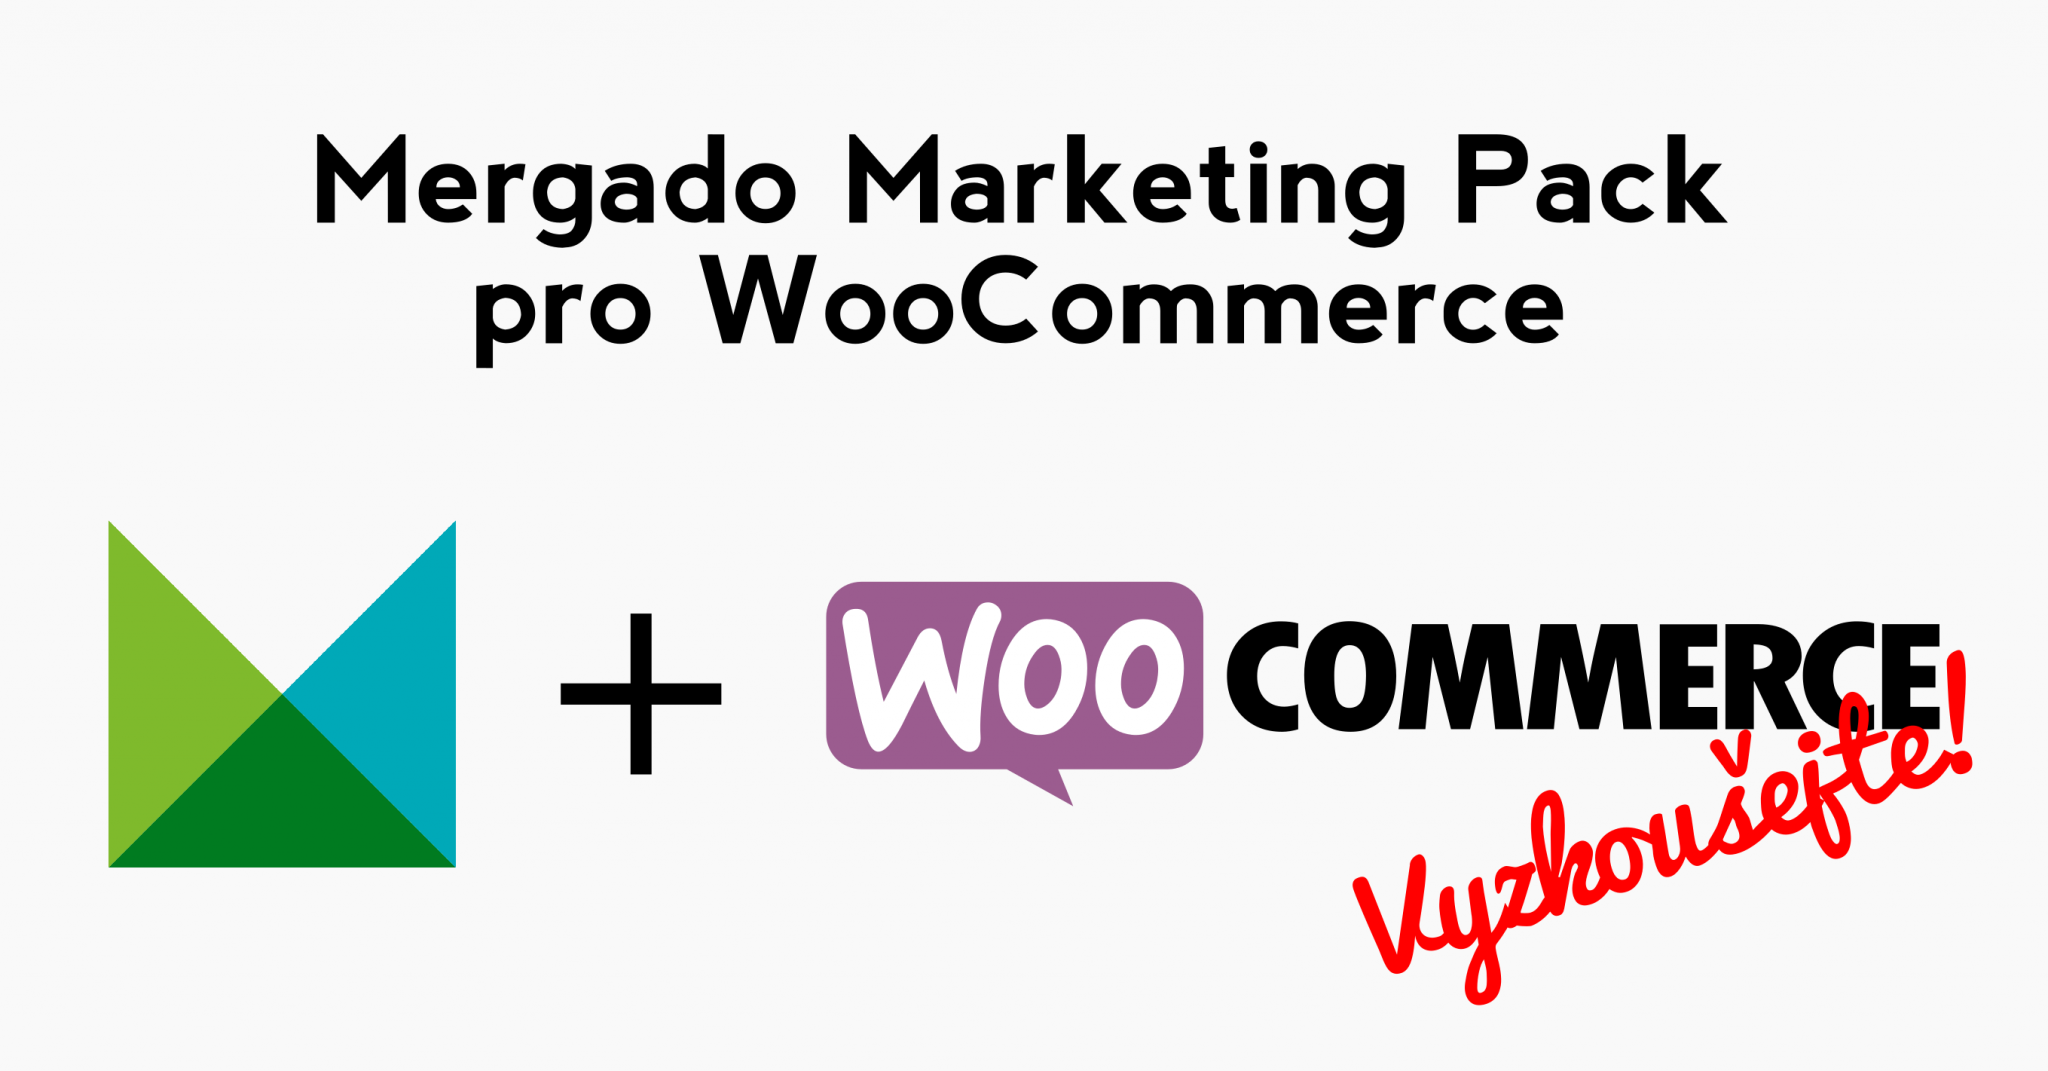 Mergado Marketing Pack pro WooCommerce